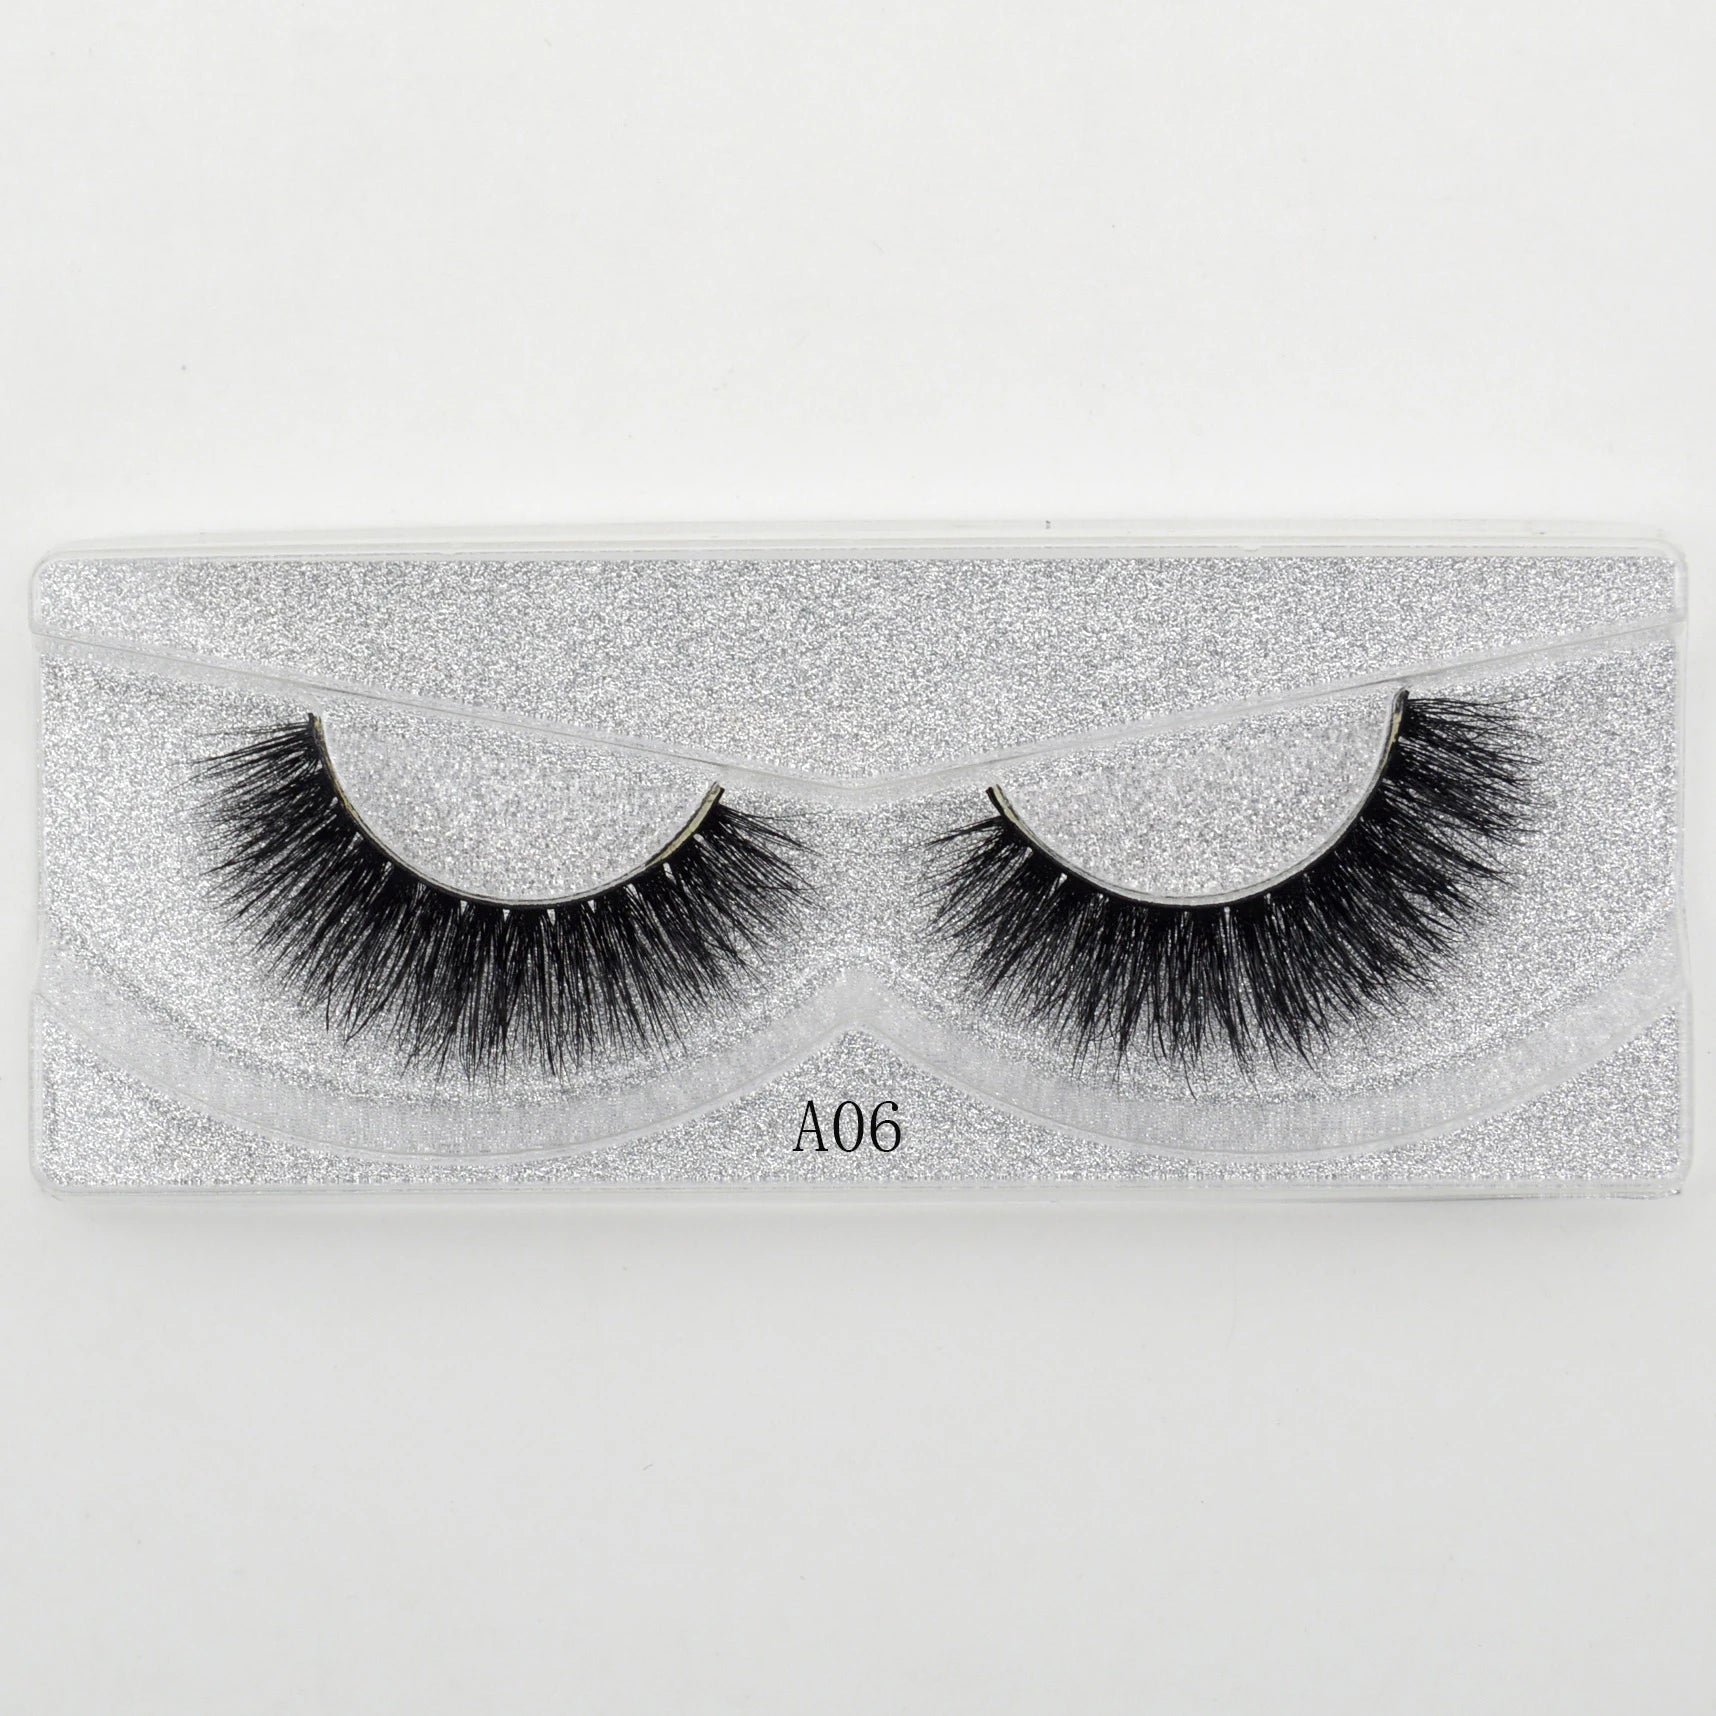 Visofree eye lashes soft lashes long cilios maquiagem false eyelashes Upper  Real Mink Makeup Thick sexy 3D Mink lashes A21